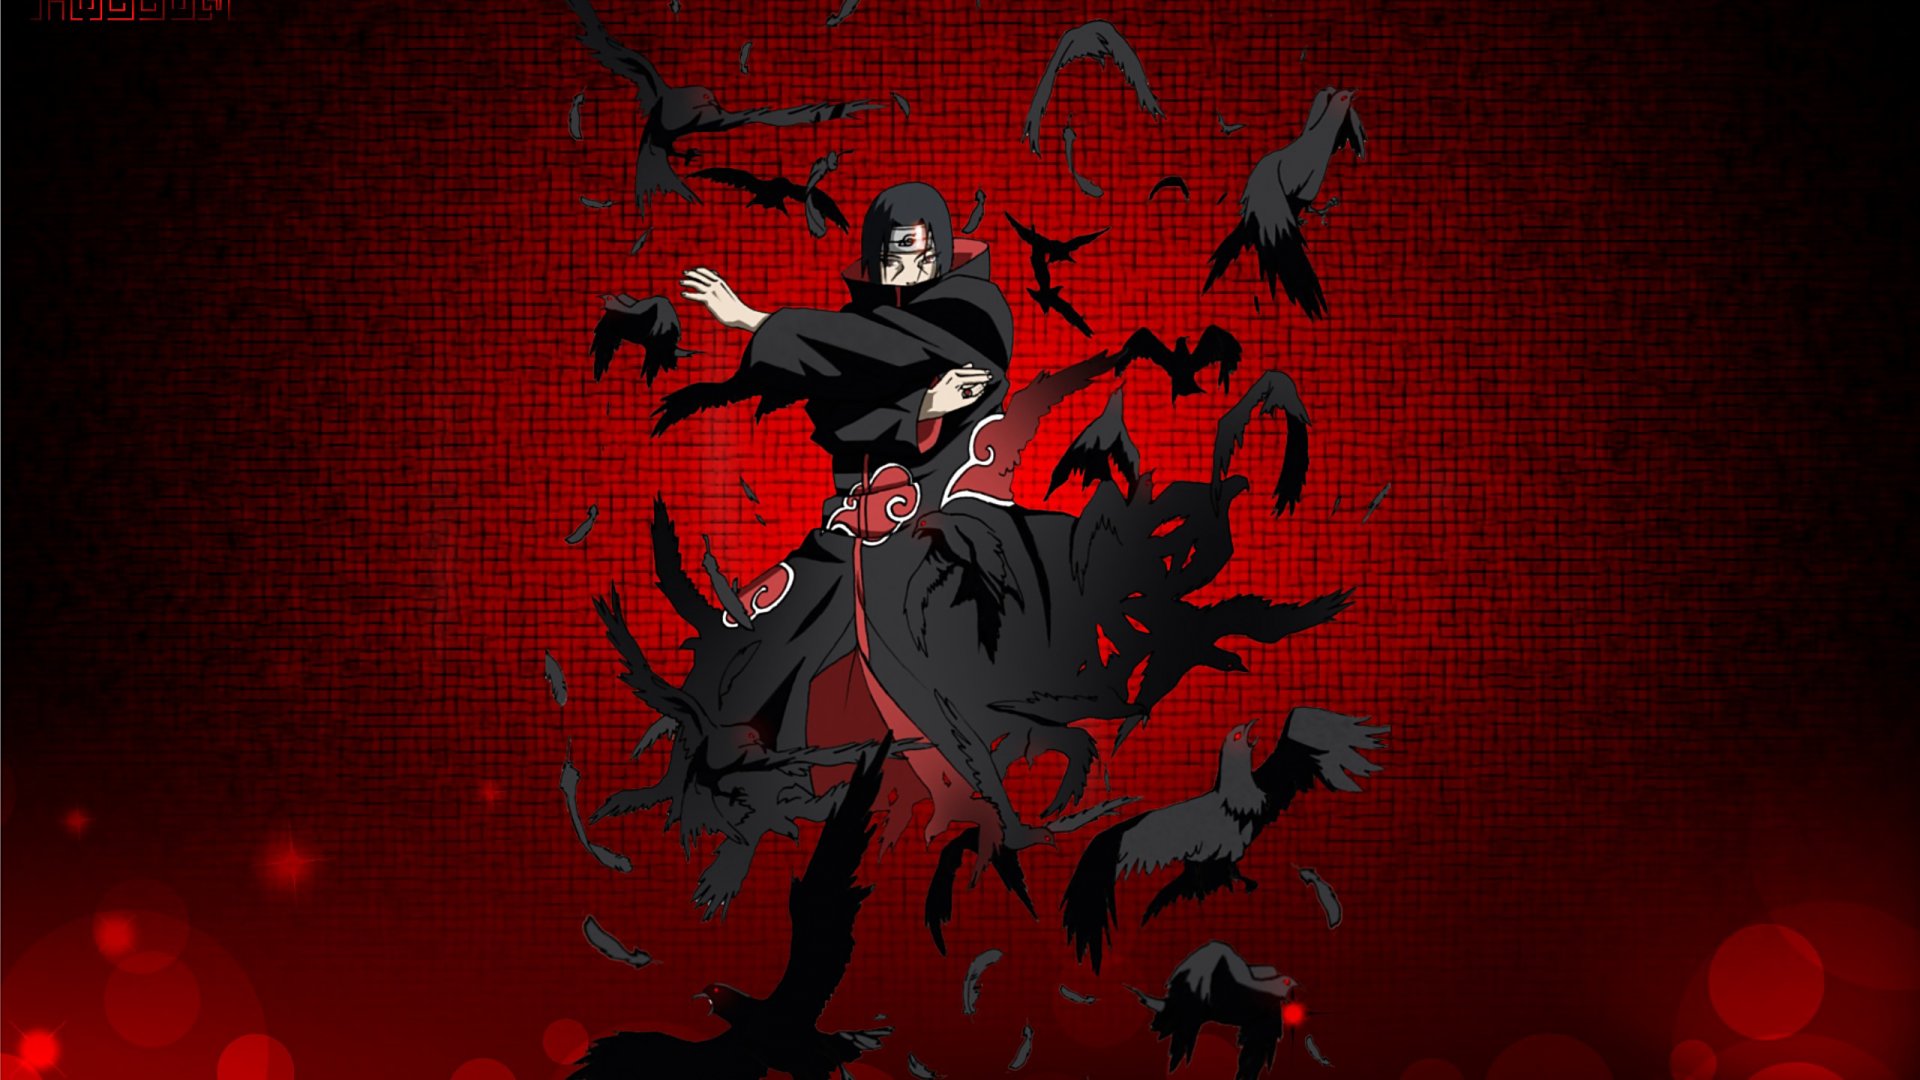 Itachi Uchiha from Naruto Anime Wallpaper 2k Quad HD ID:7752